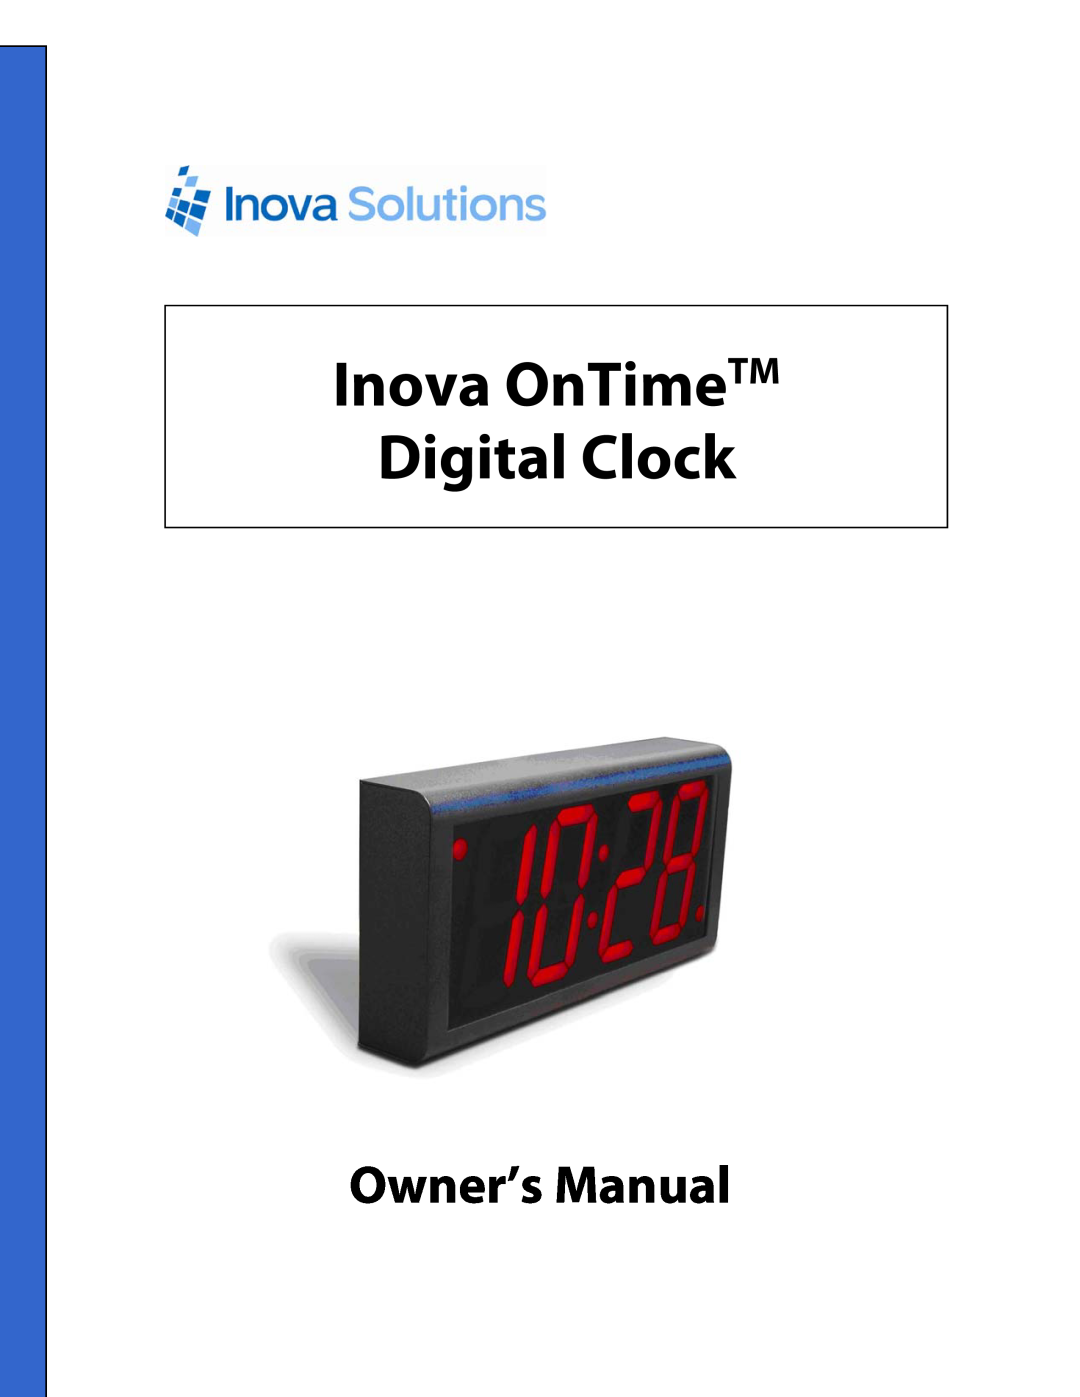 Inova owner manual Inova OnTimeTM Digital Clock 